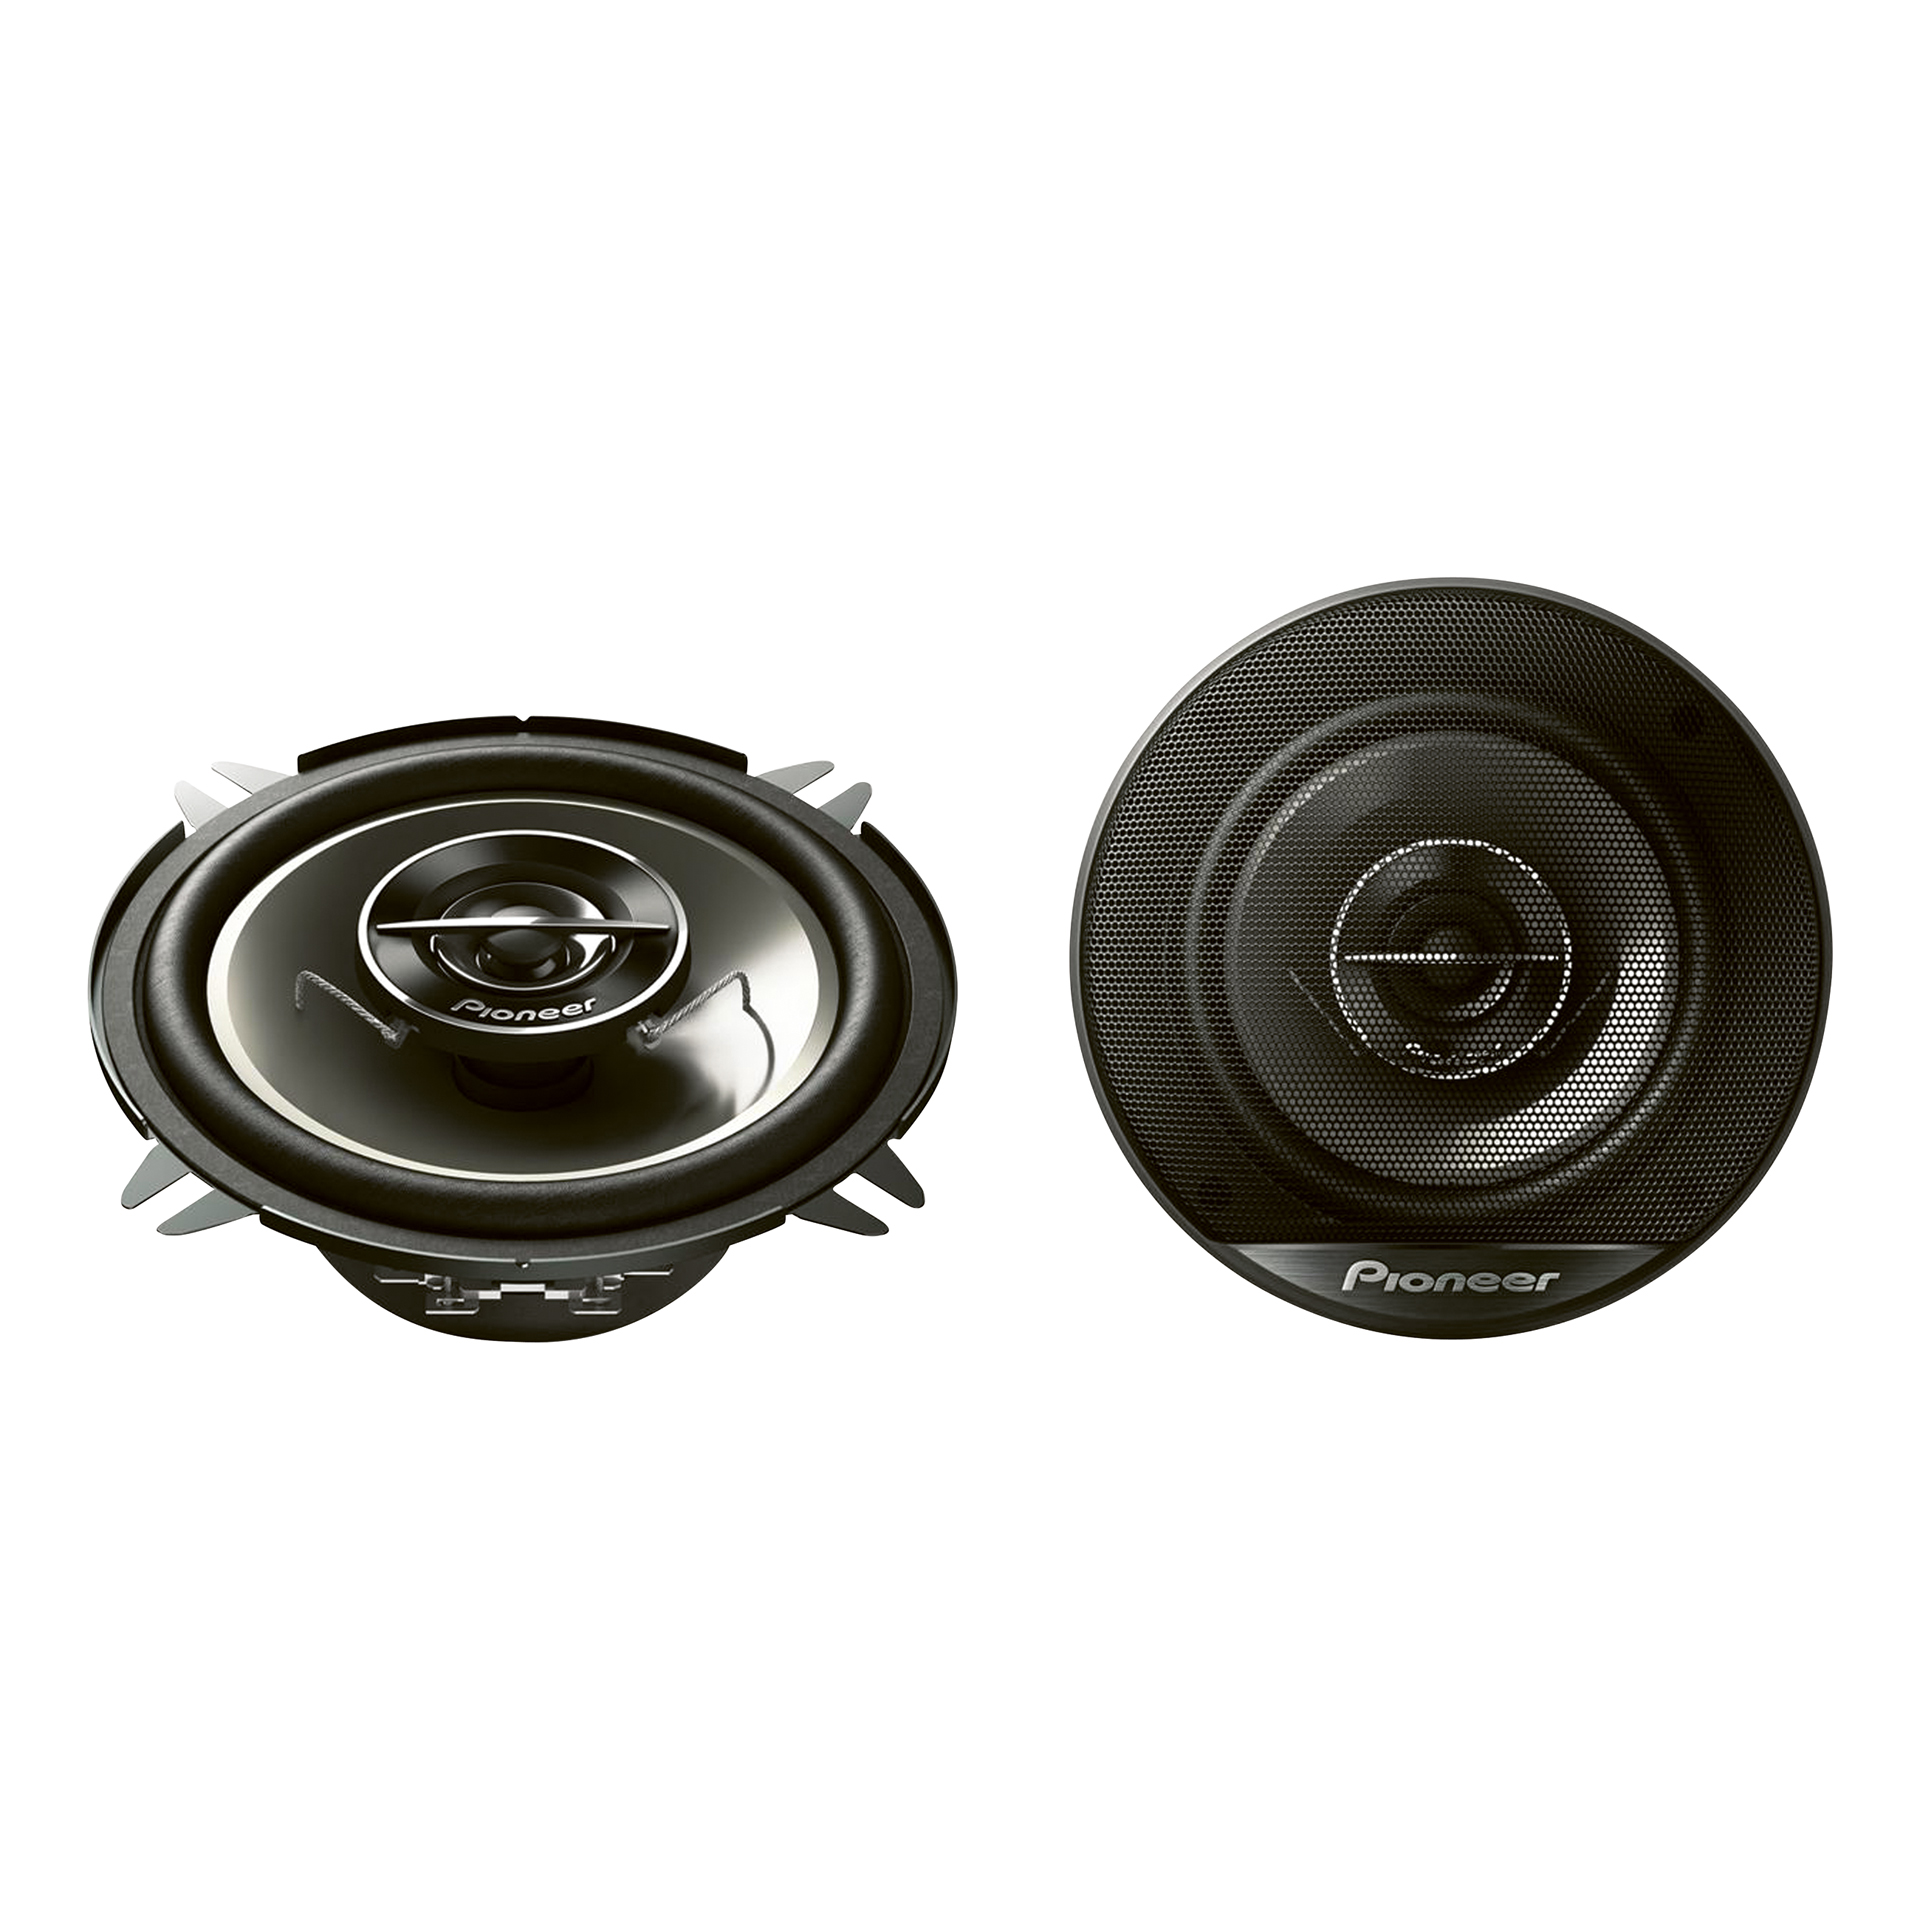 Pioneer TS-G1320F Speakerset 250W 13cm (0810515)